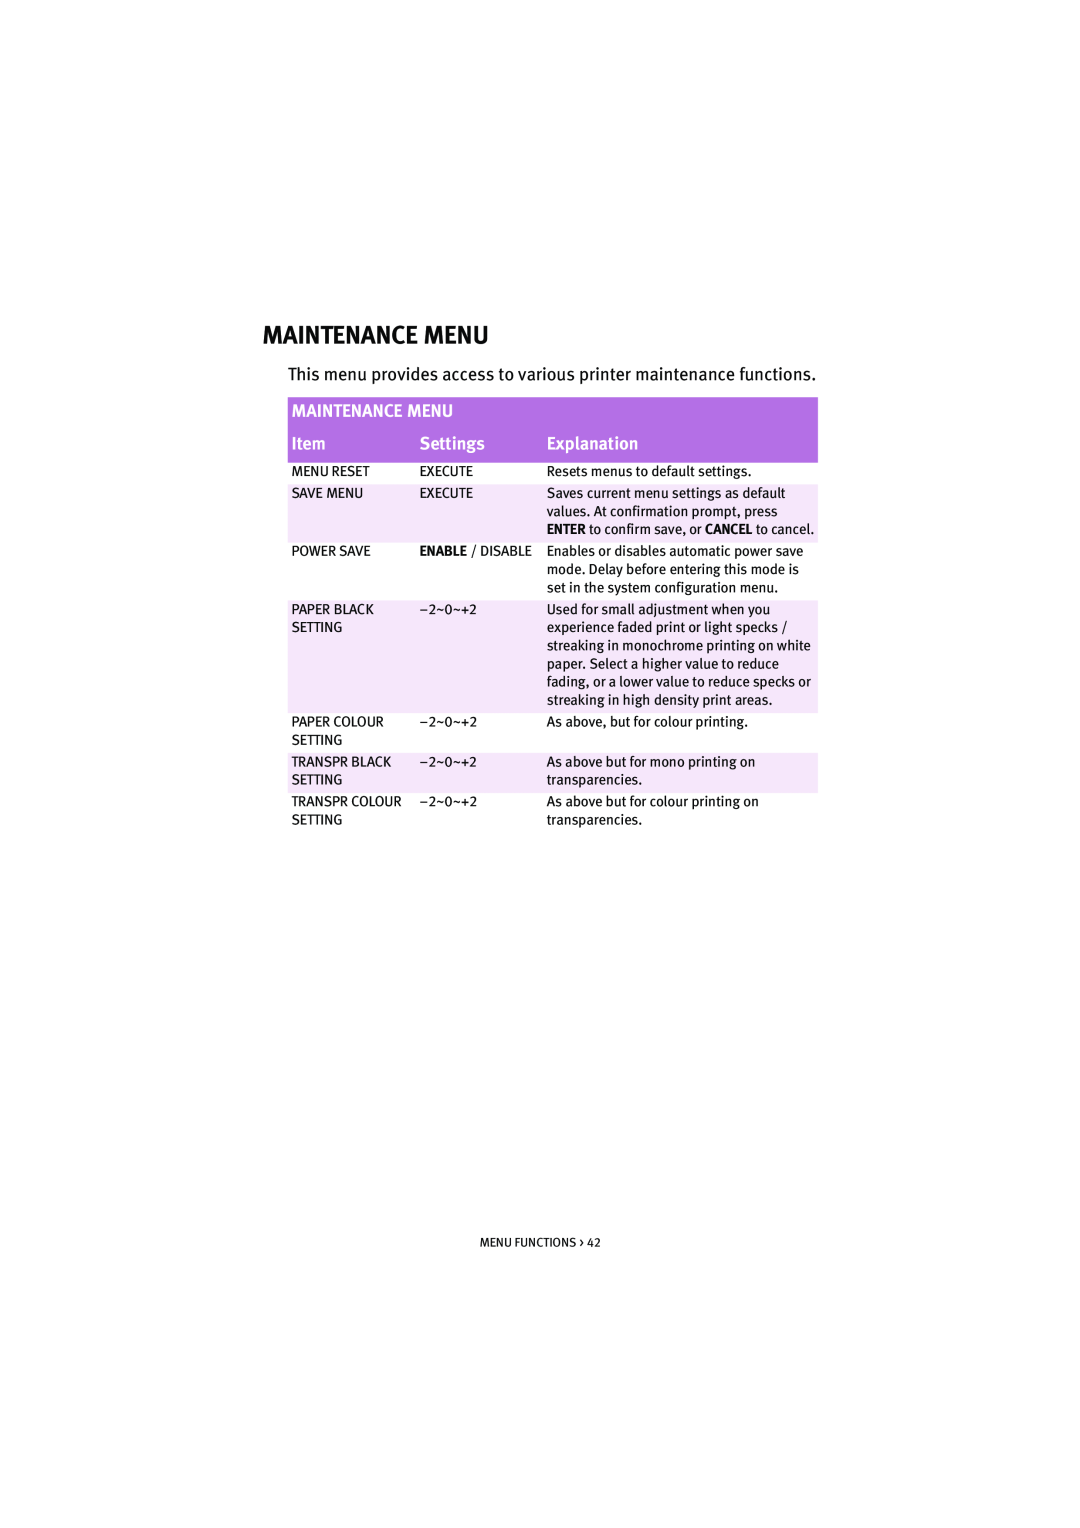 Oki 5200n Maintenance Menu, This menu provides access to various printer maintenance functions, Settings, Explanation 